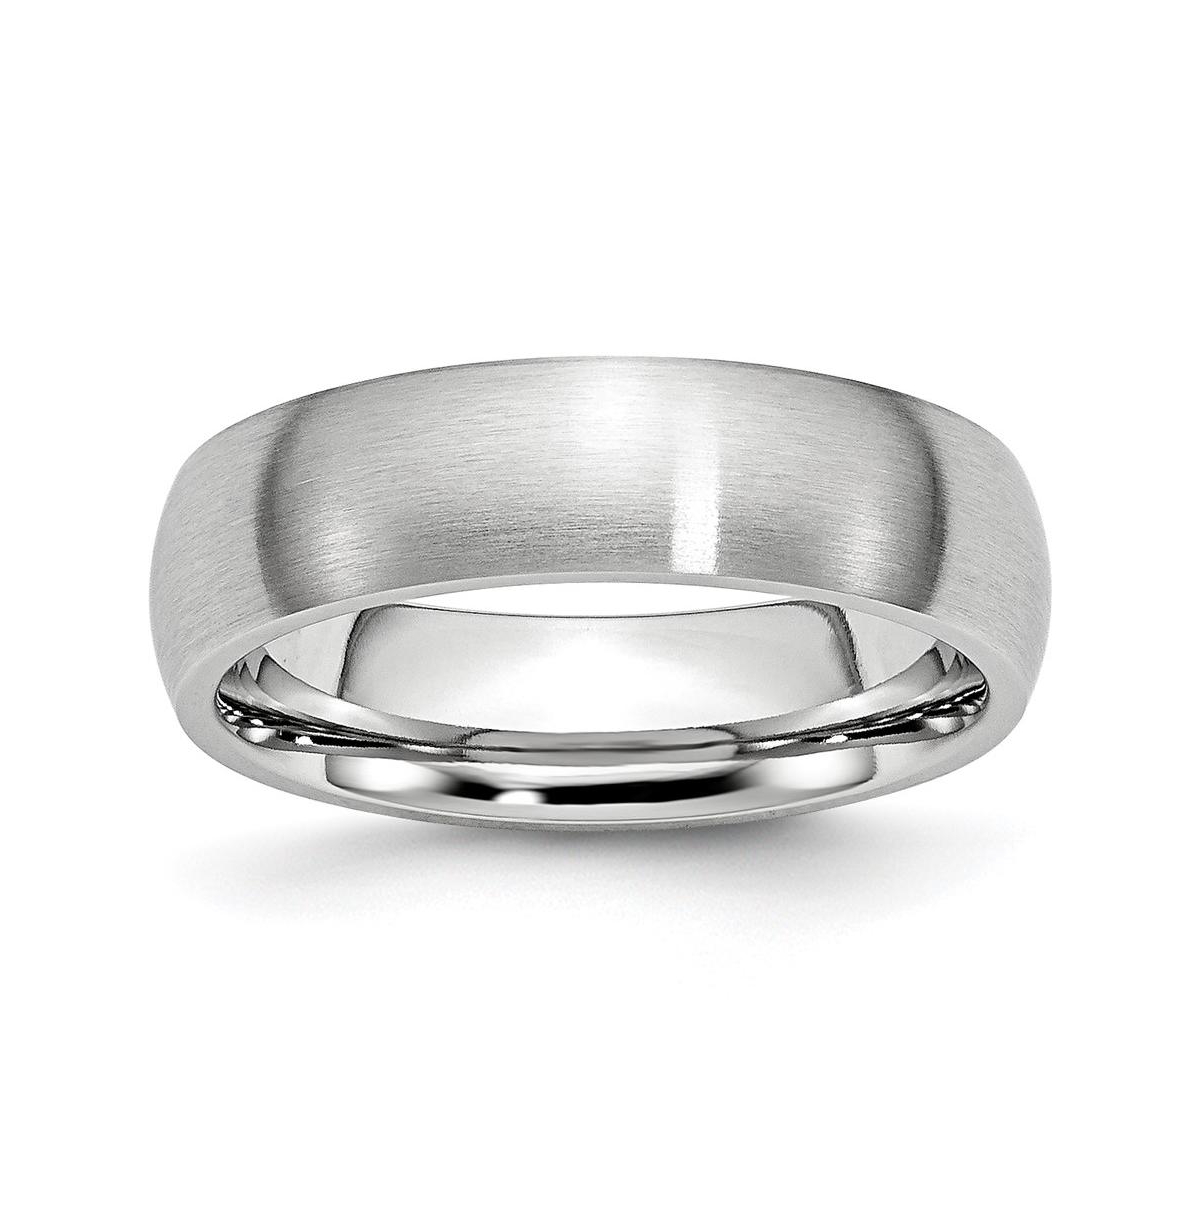 Cobalt Satin Half Round Wedding Band Ring